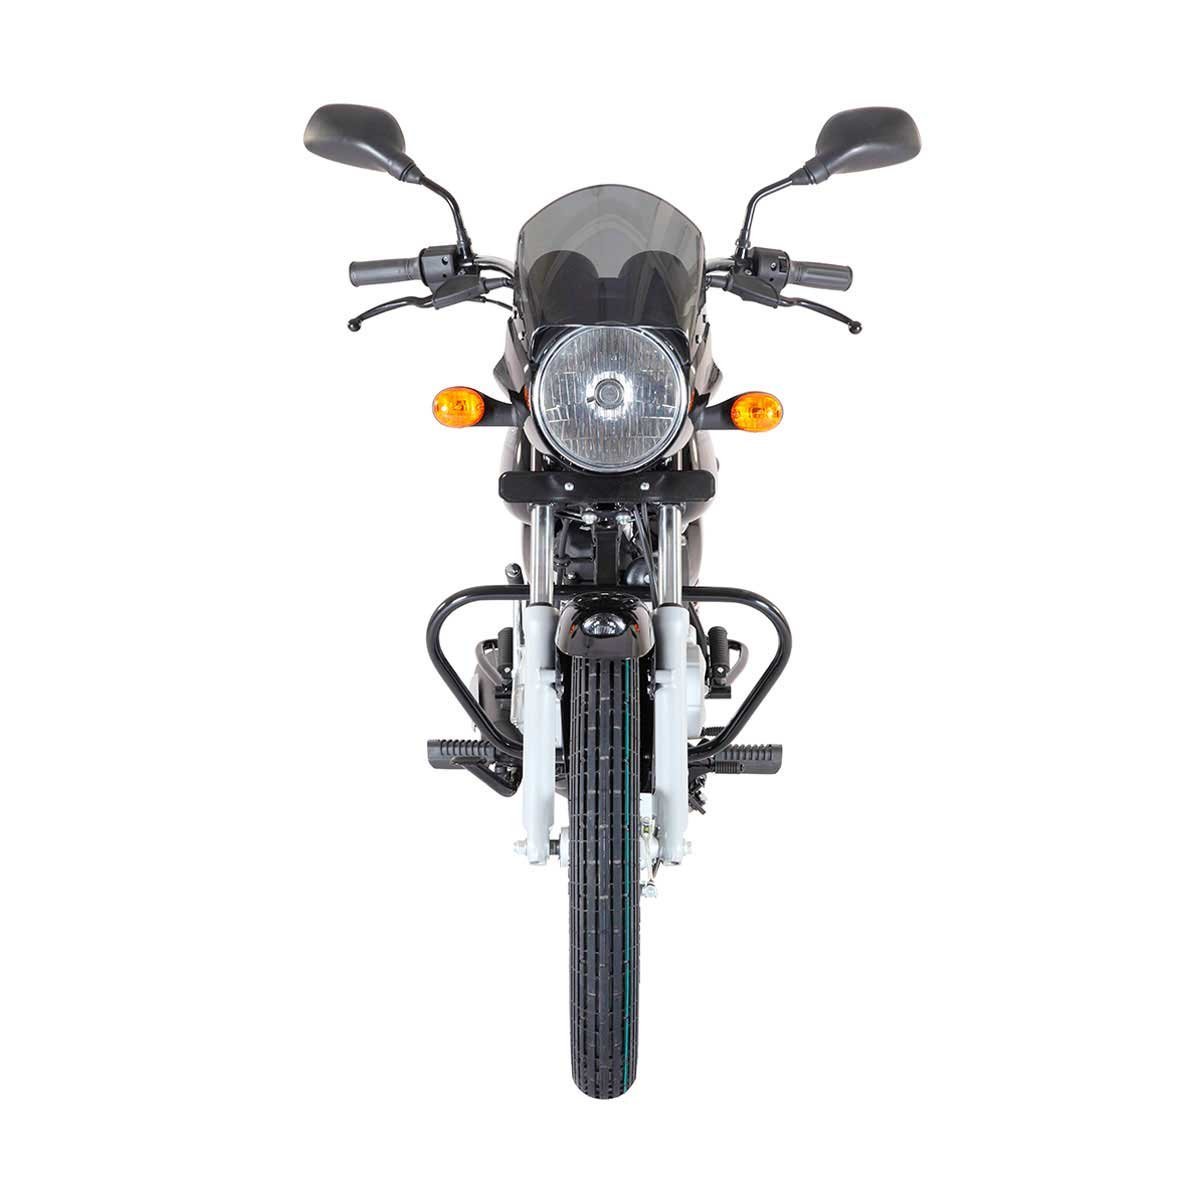 Motocicleta Boxer 150 Cc Bm Negra Bajaj